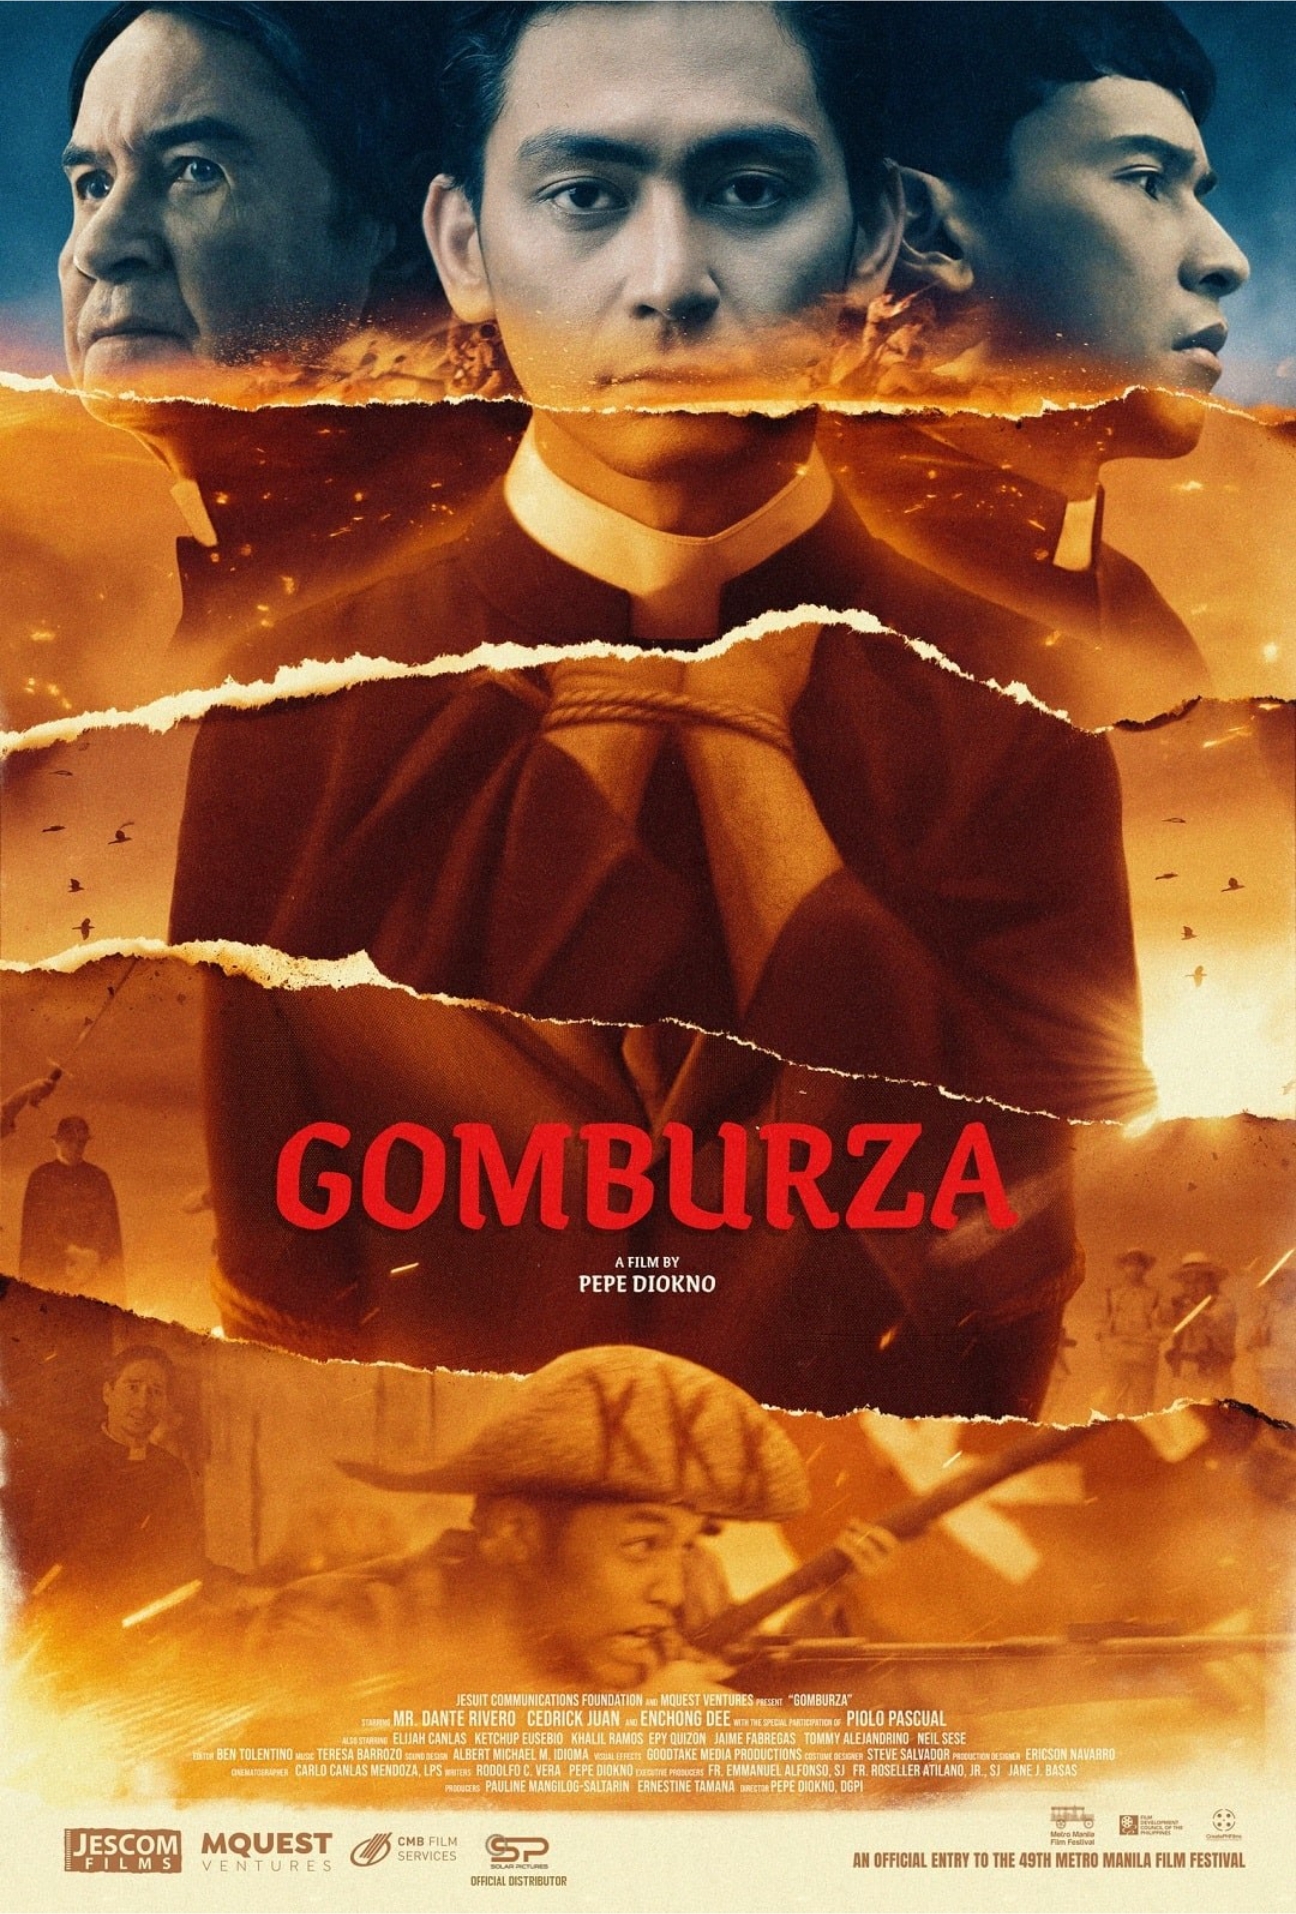 GOMBURZA